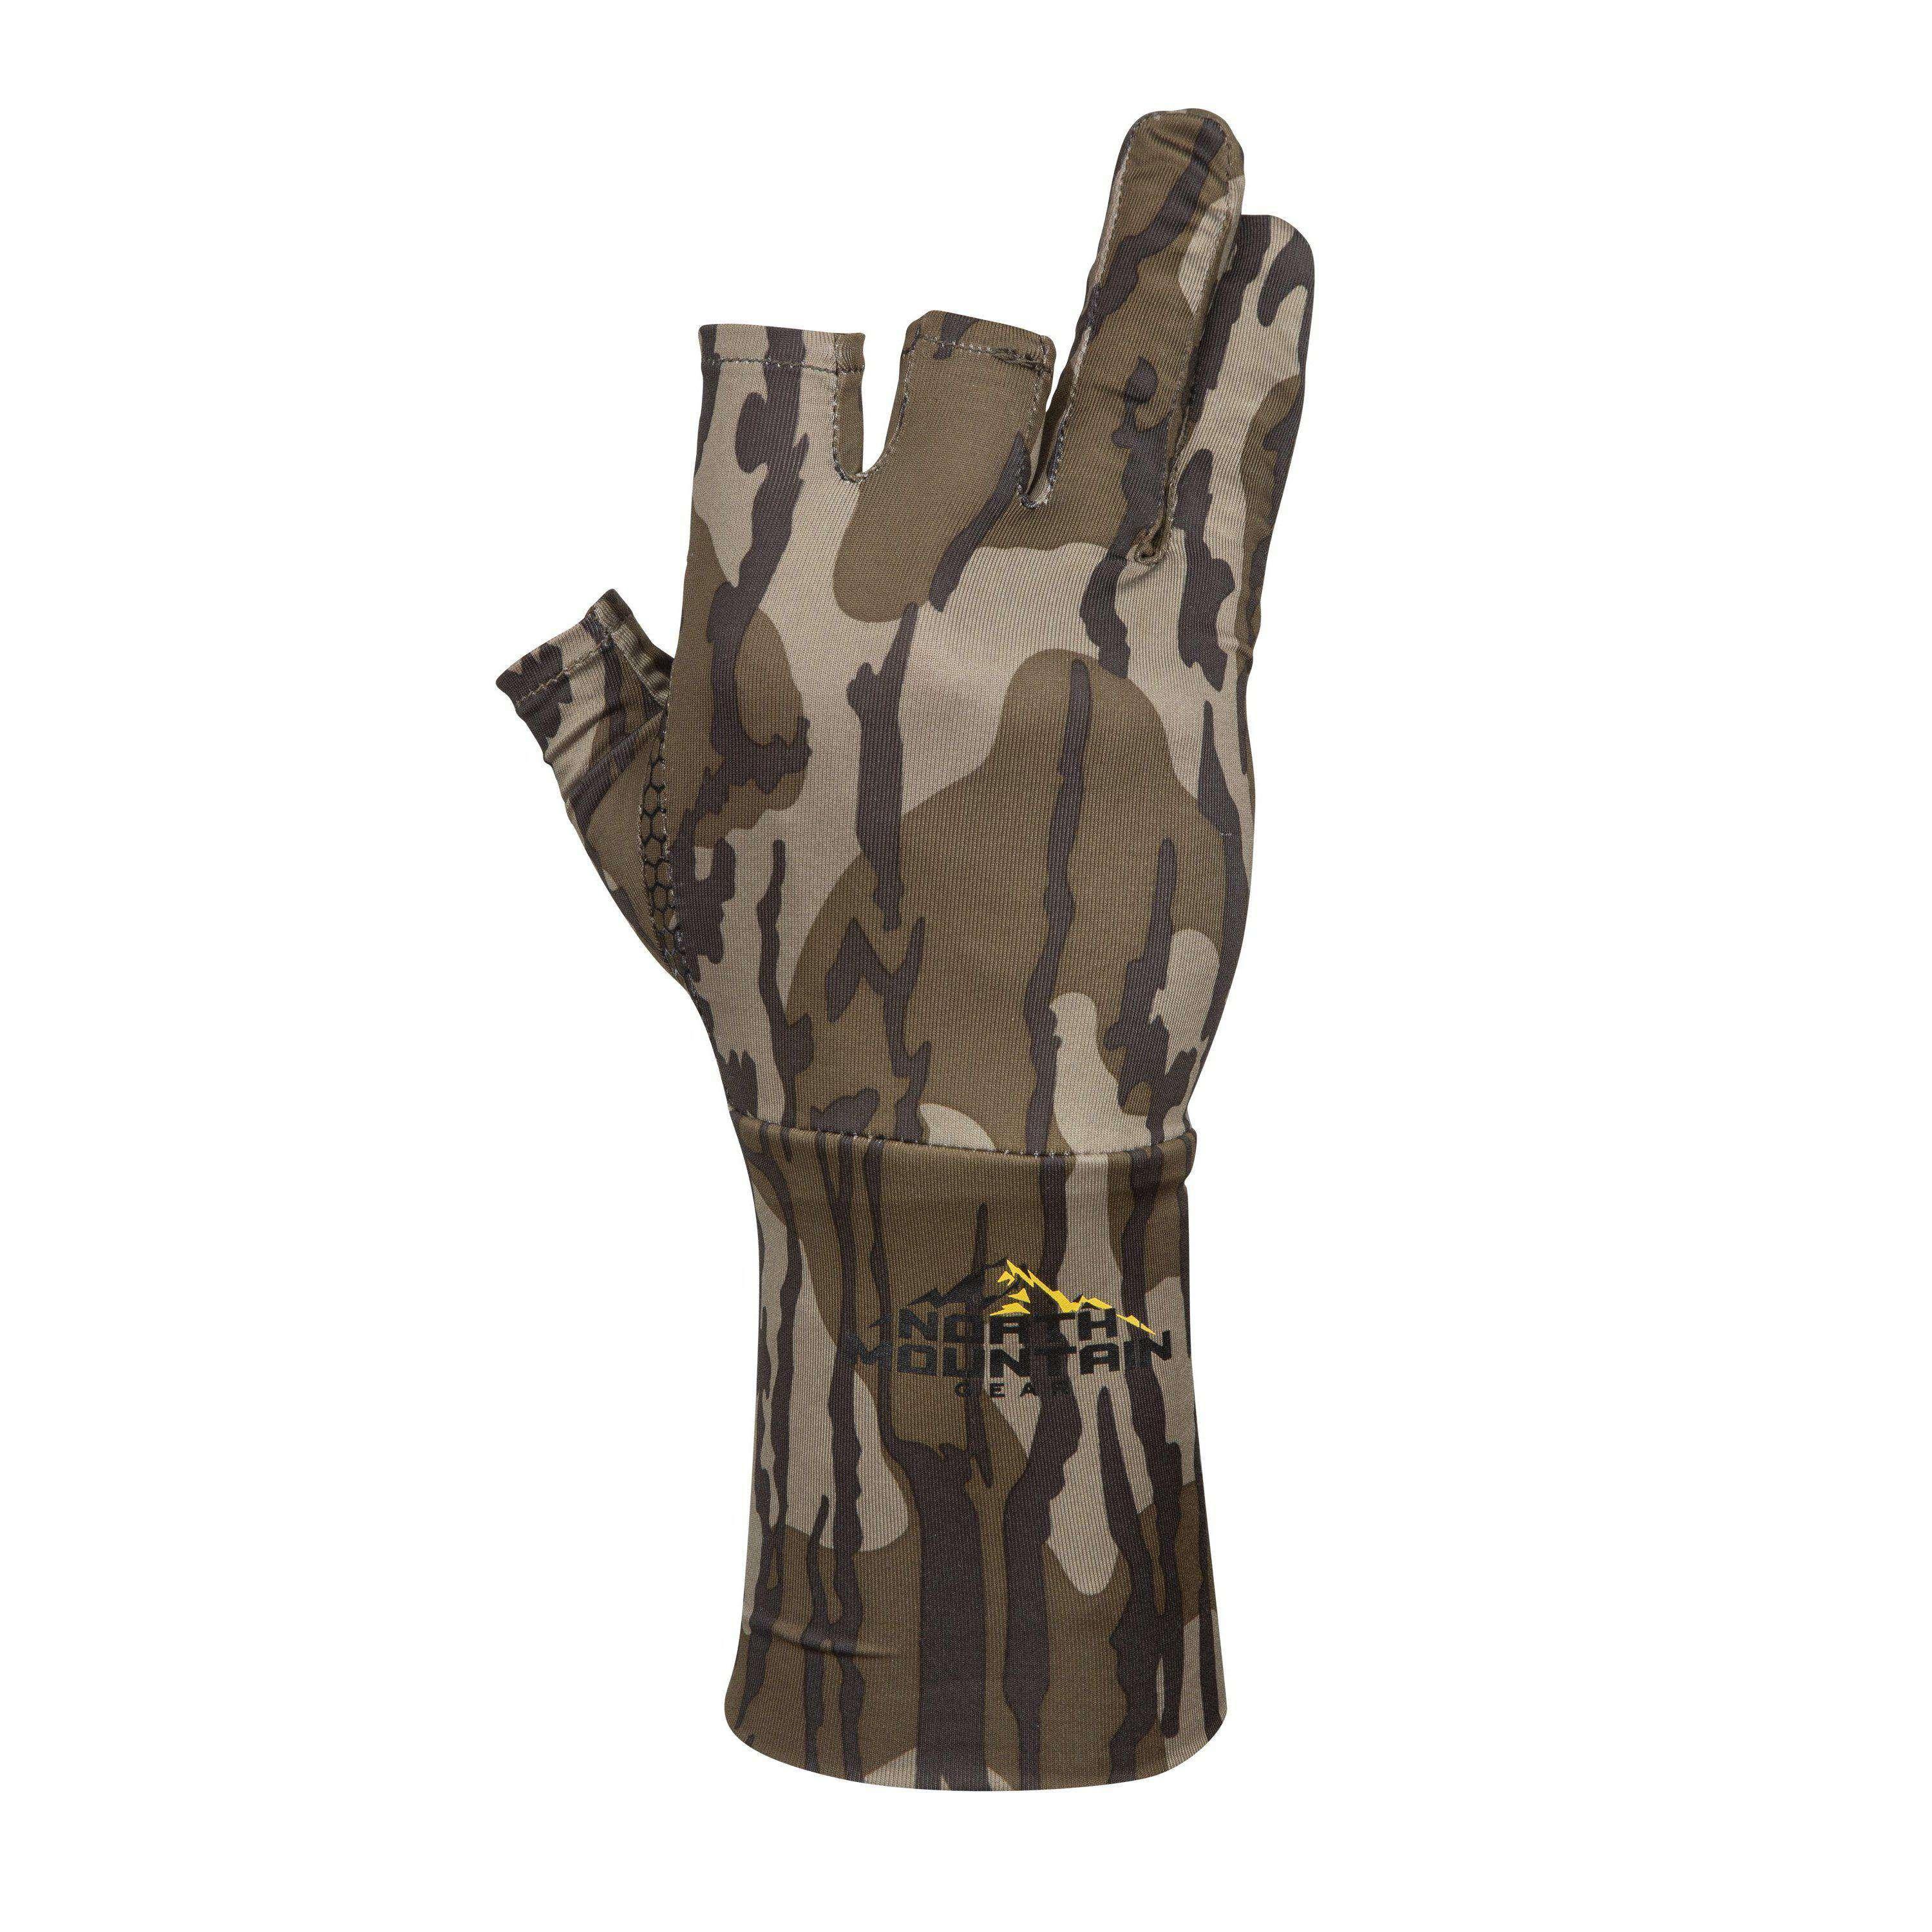 Mossy Oak Bottomland Fingerless Gloves by North Mountain Gear